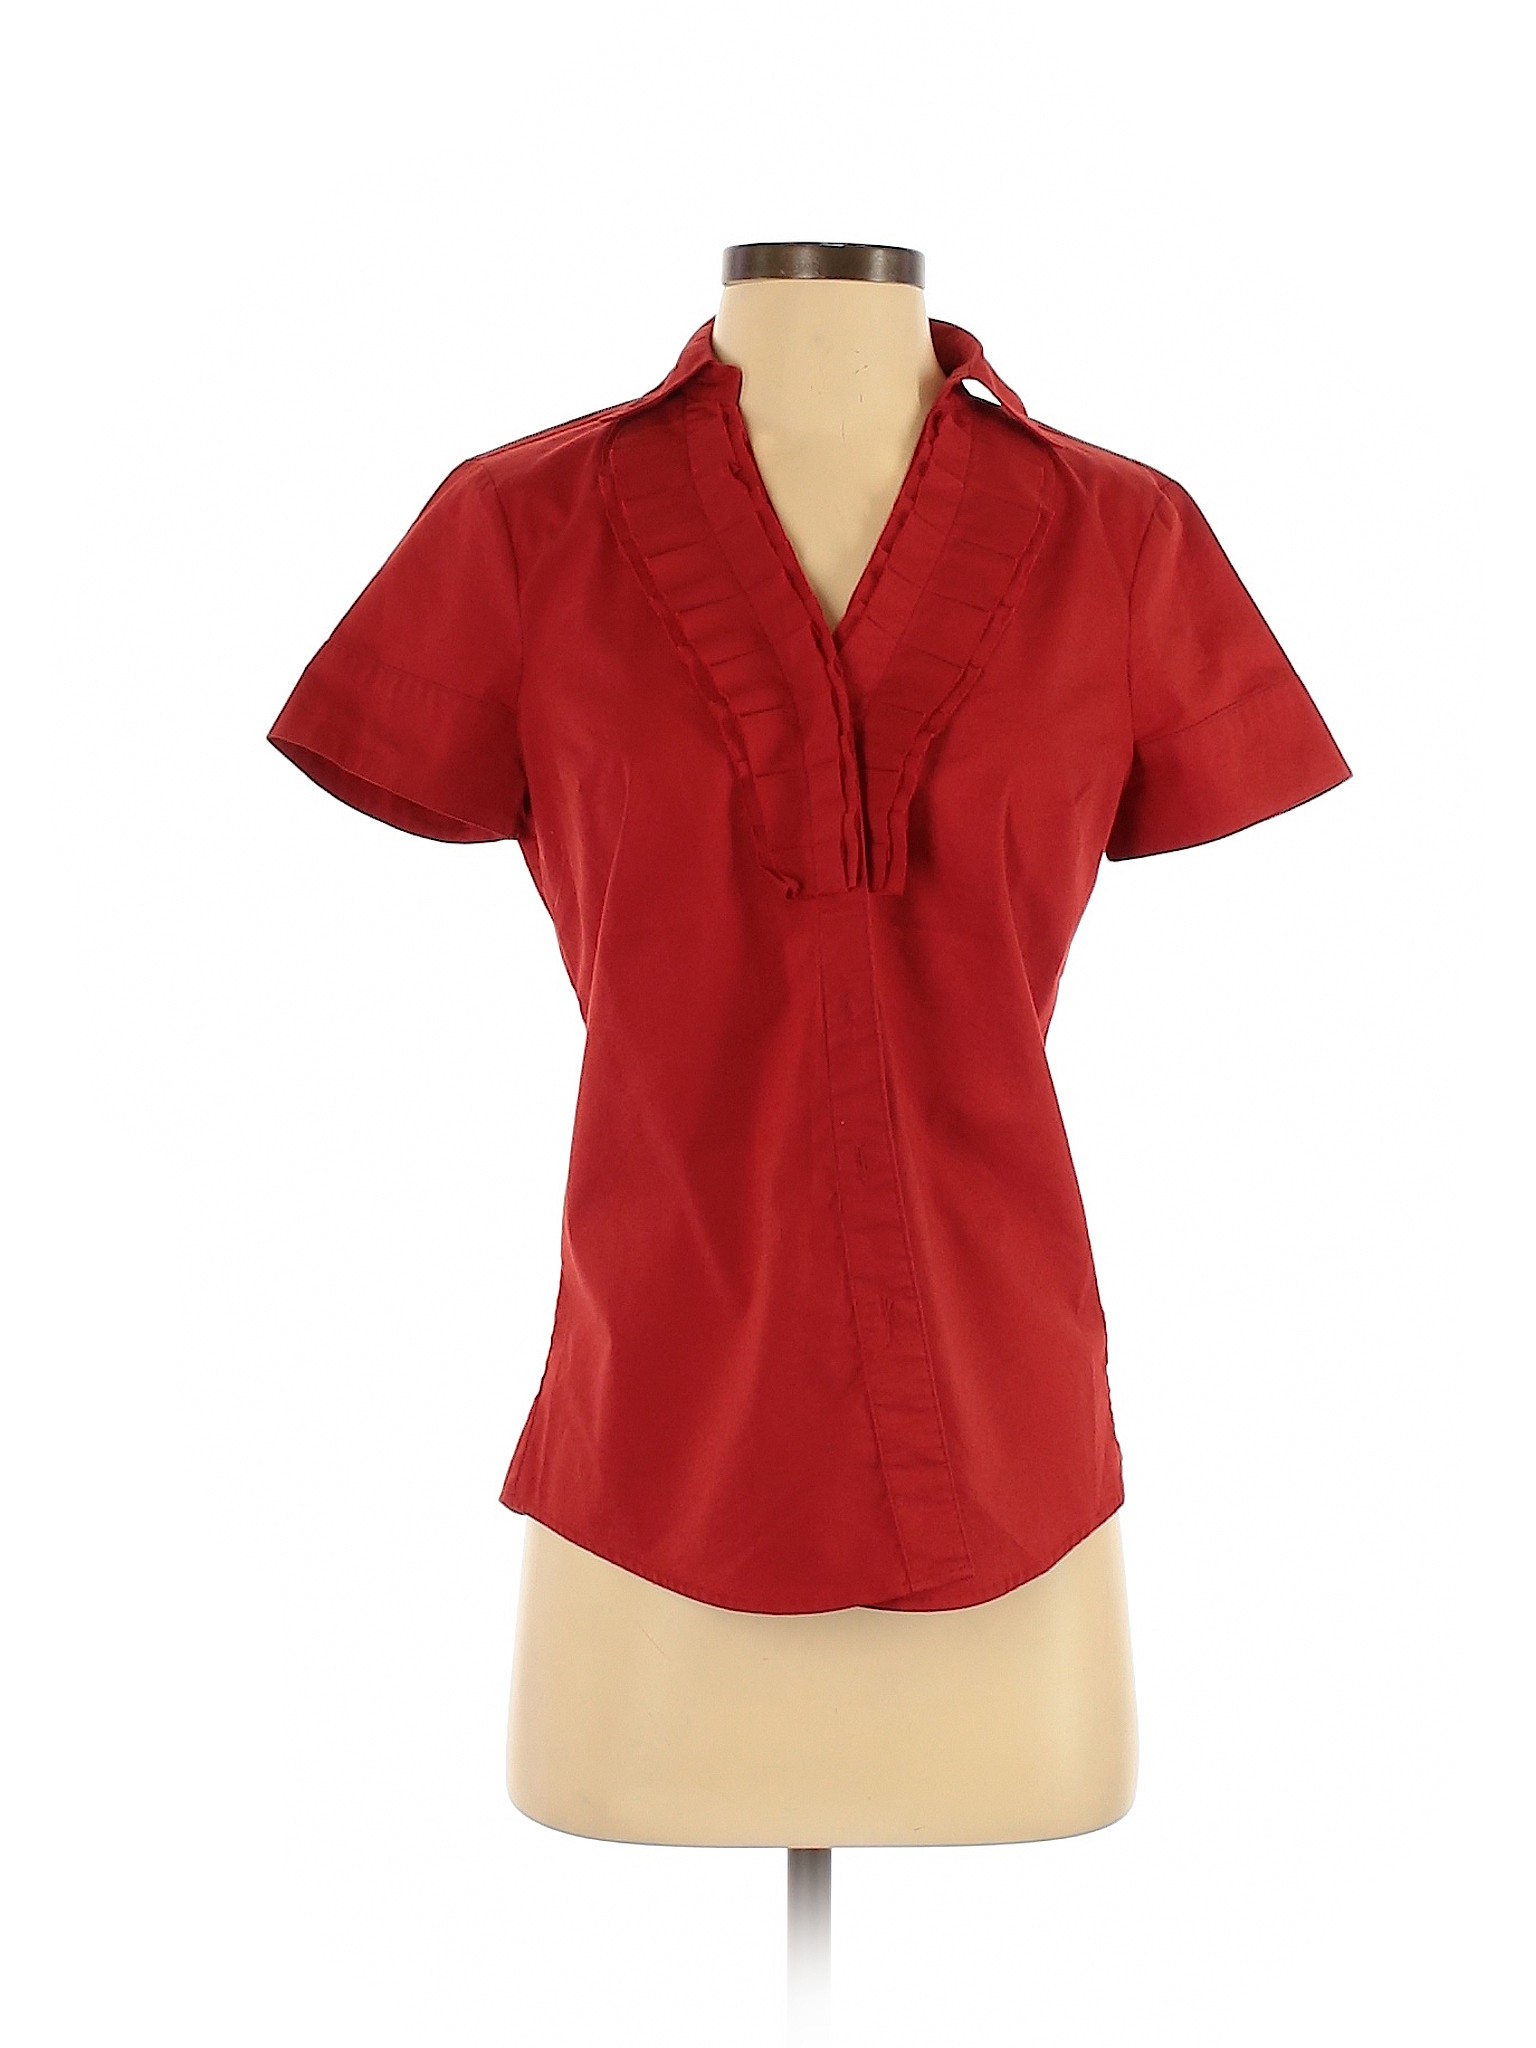 red button up shirt short sleeve women with a collar